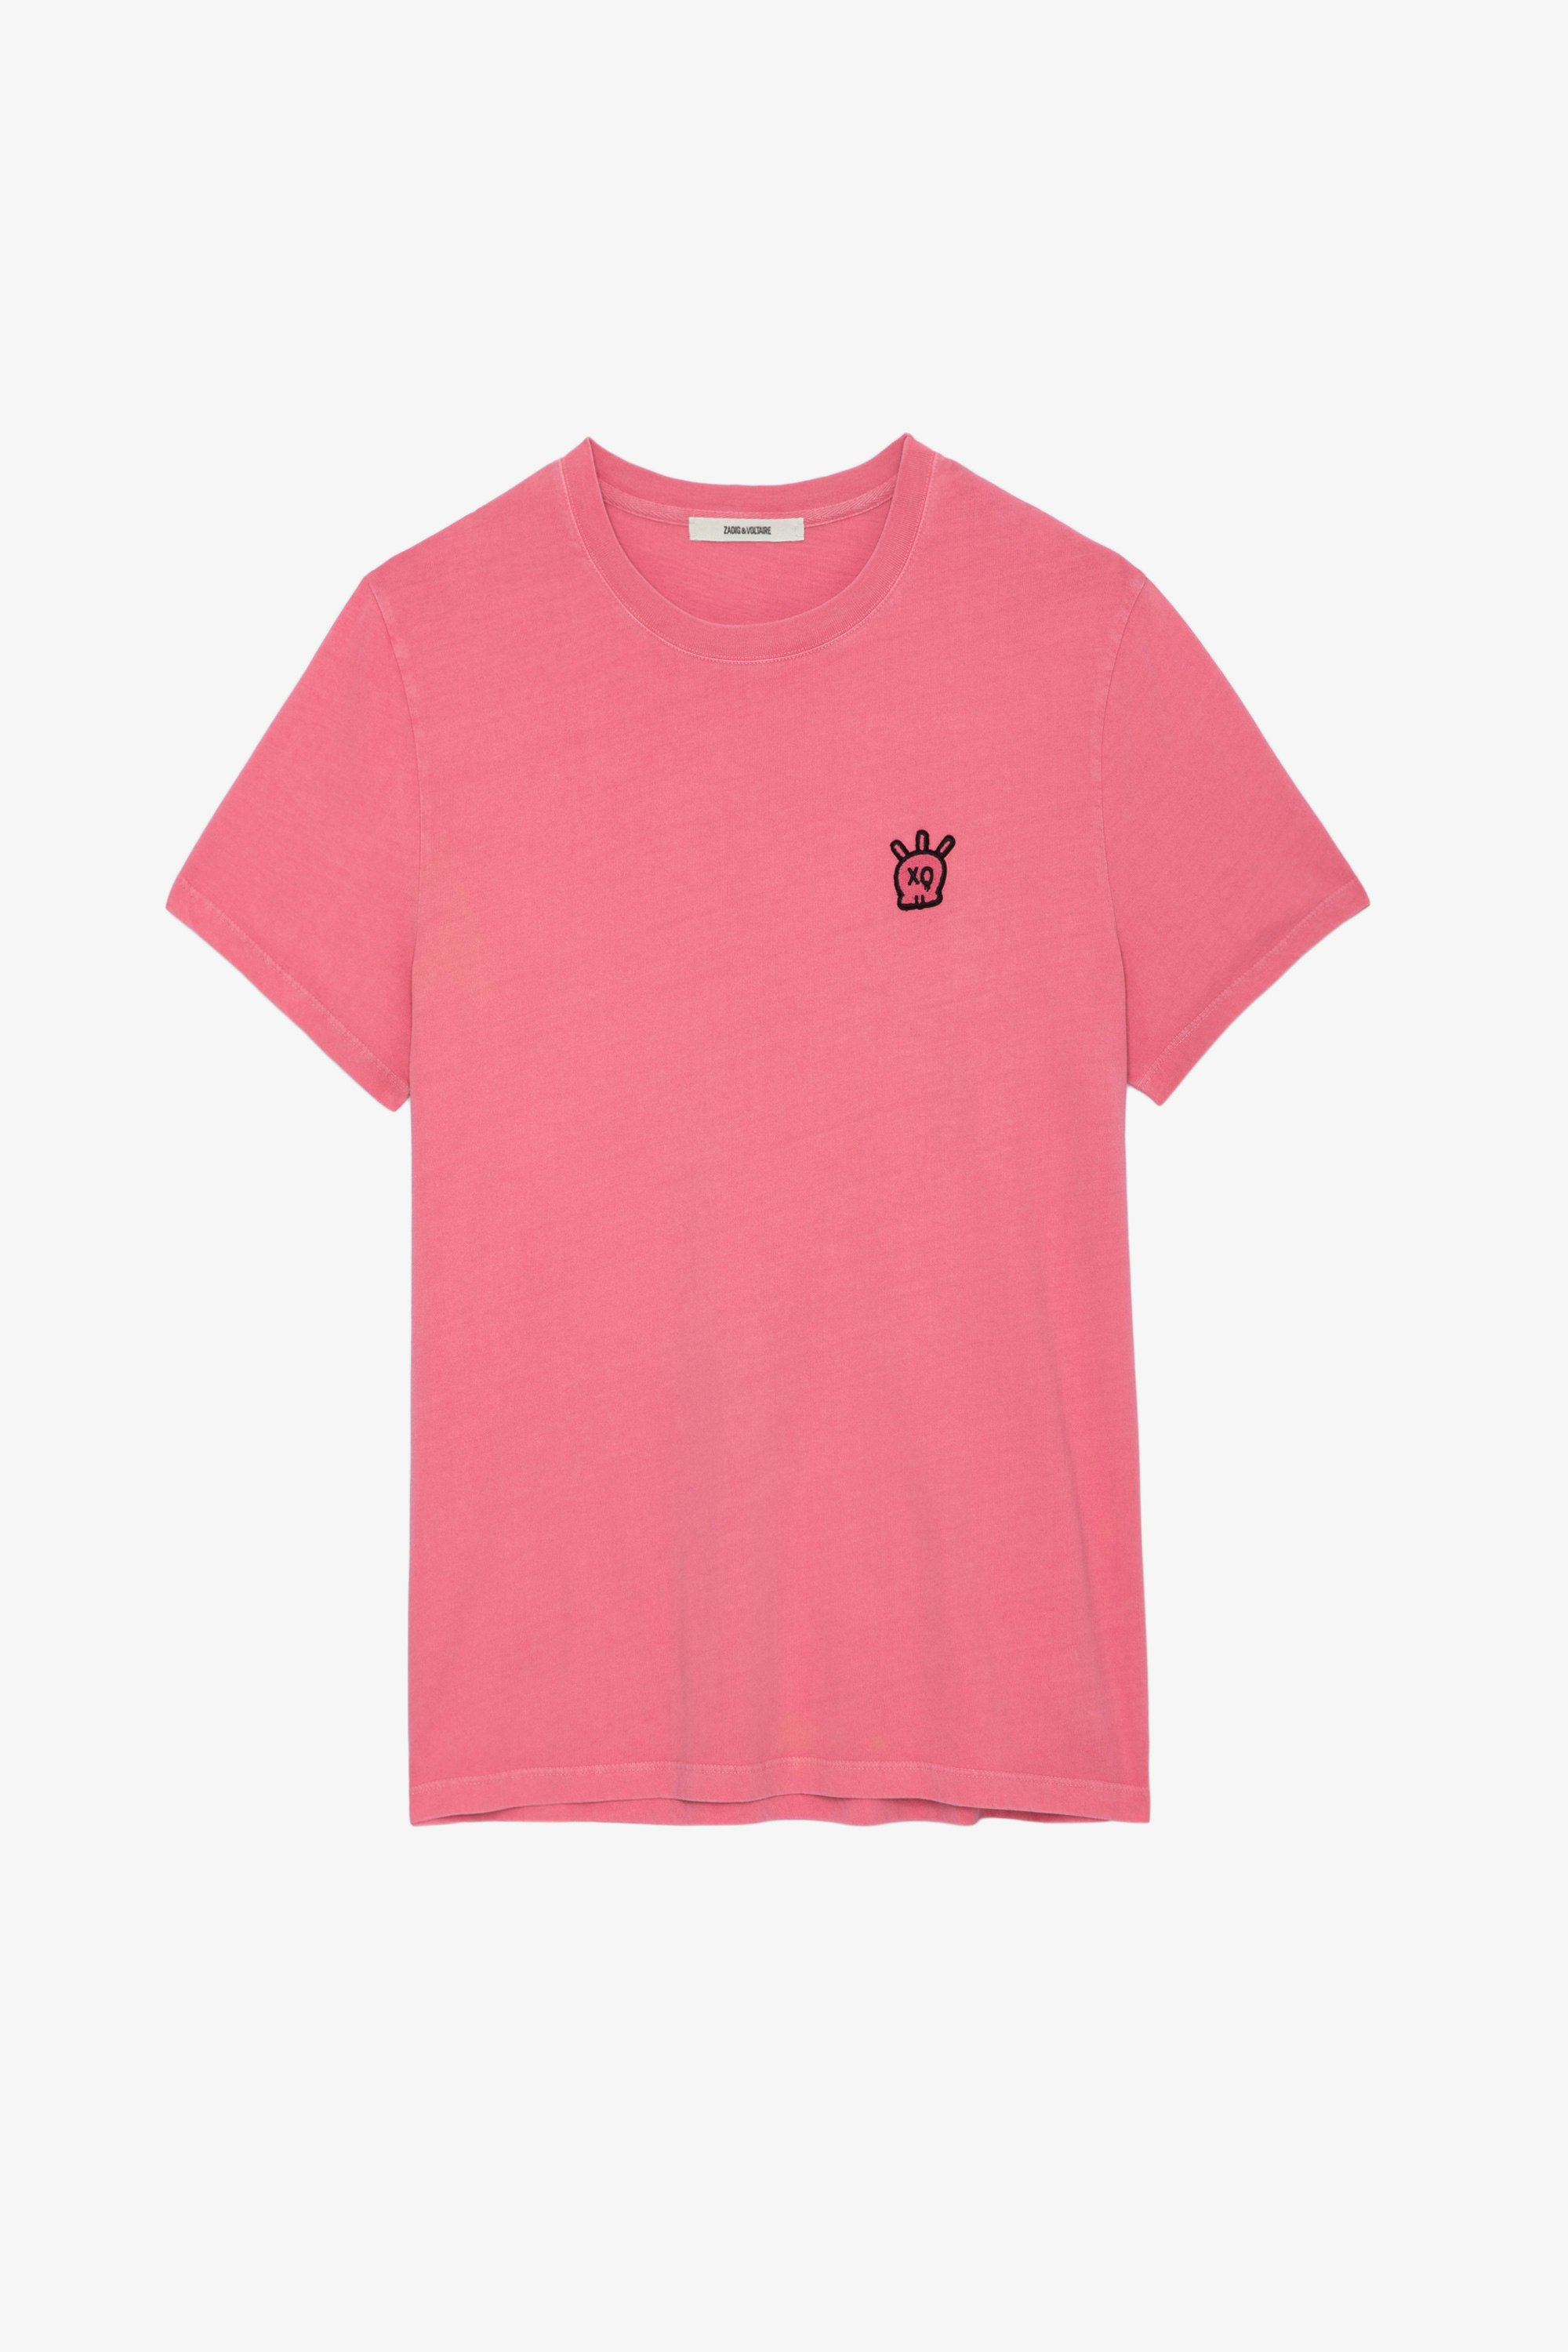 Camiseta Tommy Skull XO - Camiseta rosa de algodón de manga corta con cuello redondo y parche Skull XO.